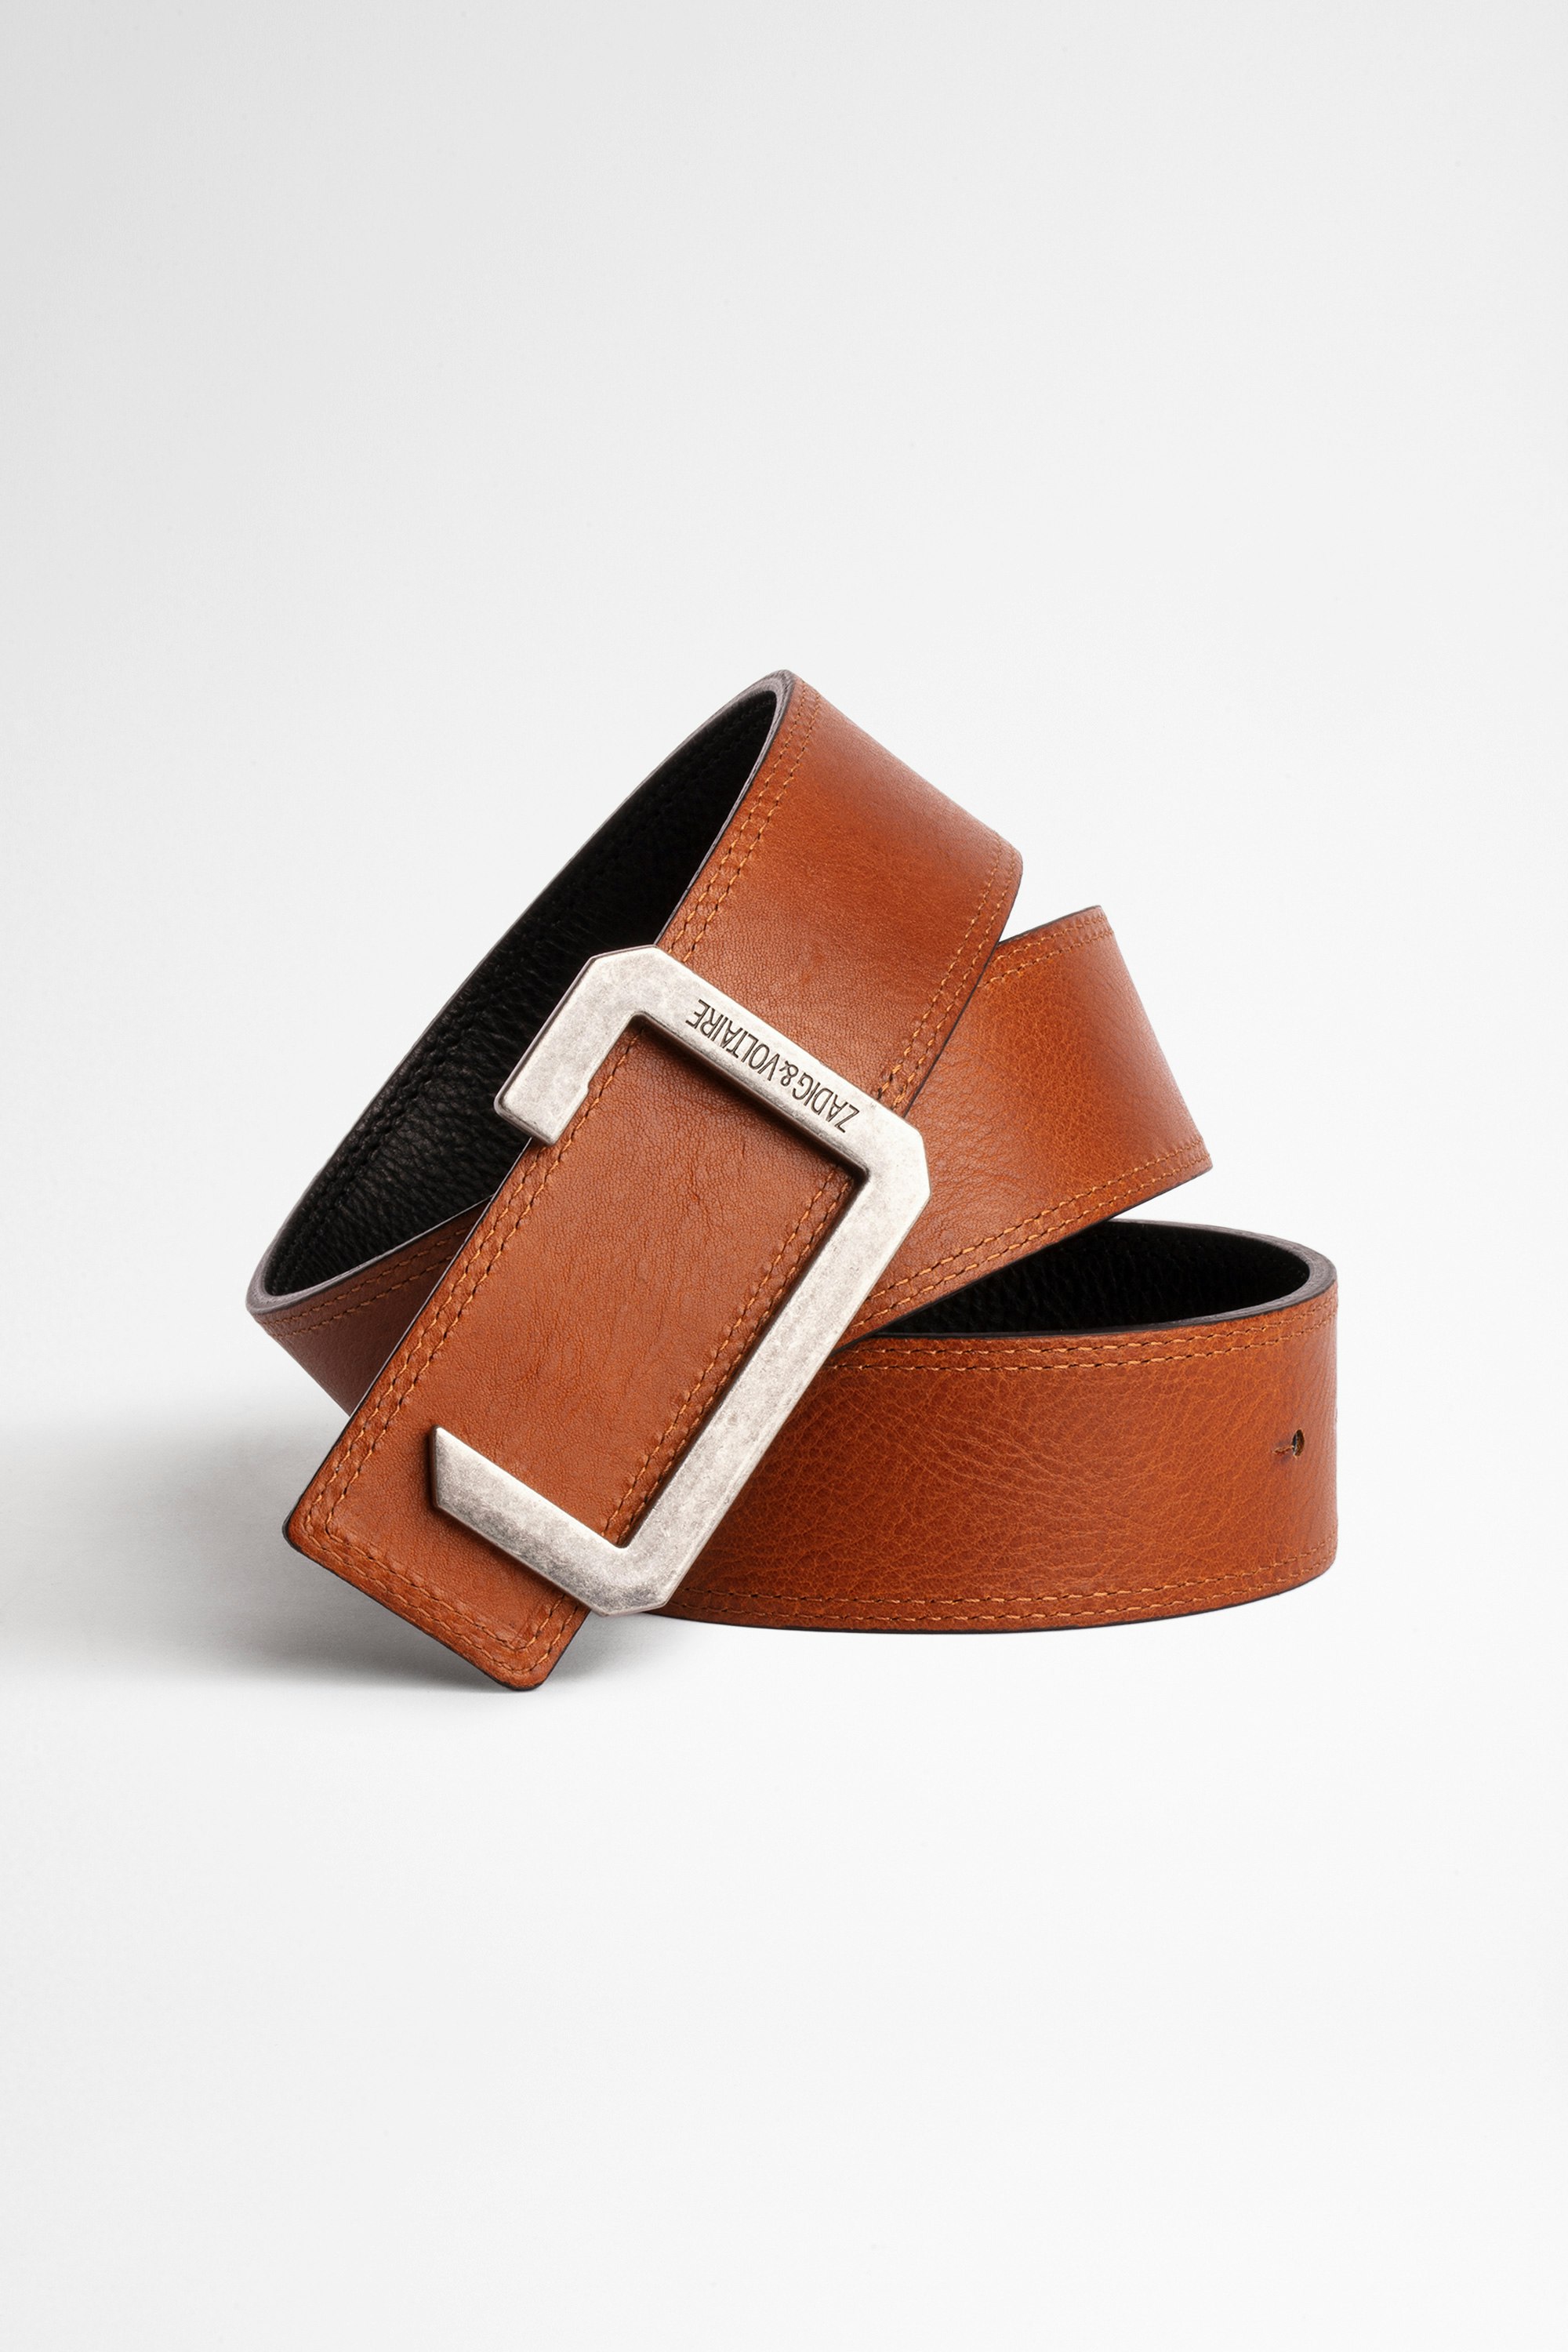 The Reversible レザーベルト Men's reversible cognac leather belt